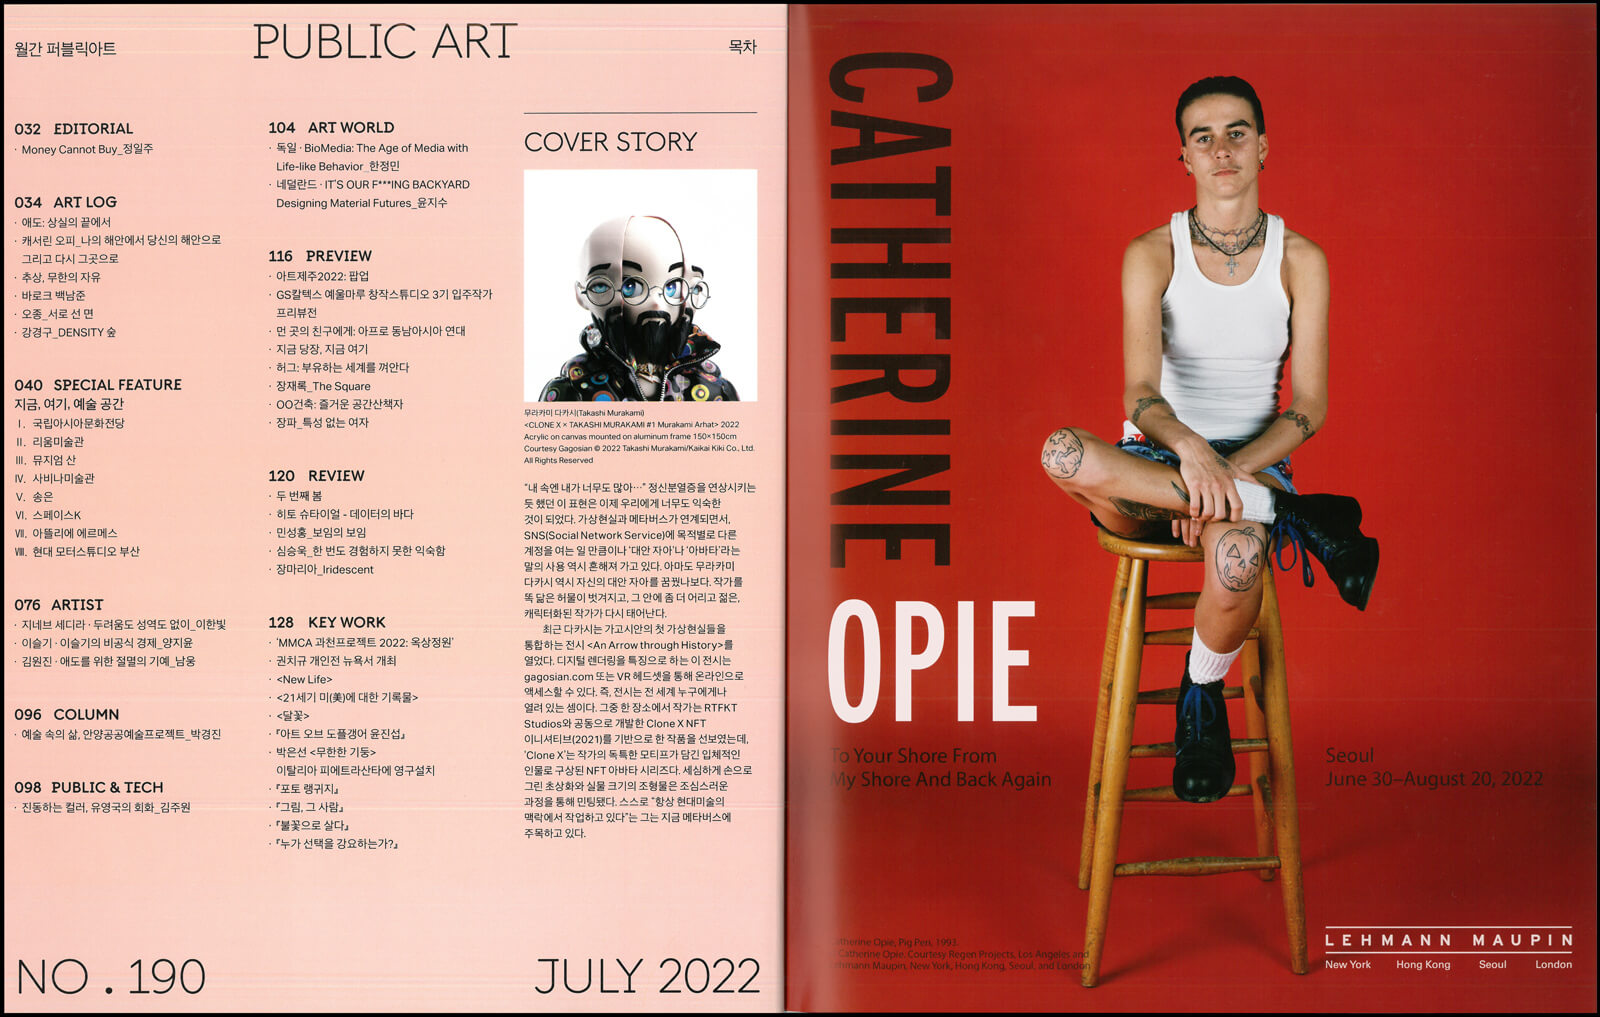 Lehmann Maupin Art Gallery Catherine Opie Public Art Advertisement